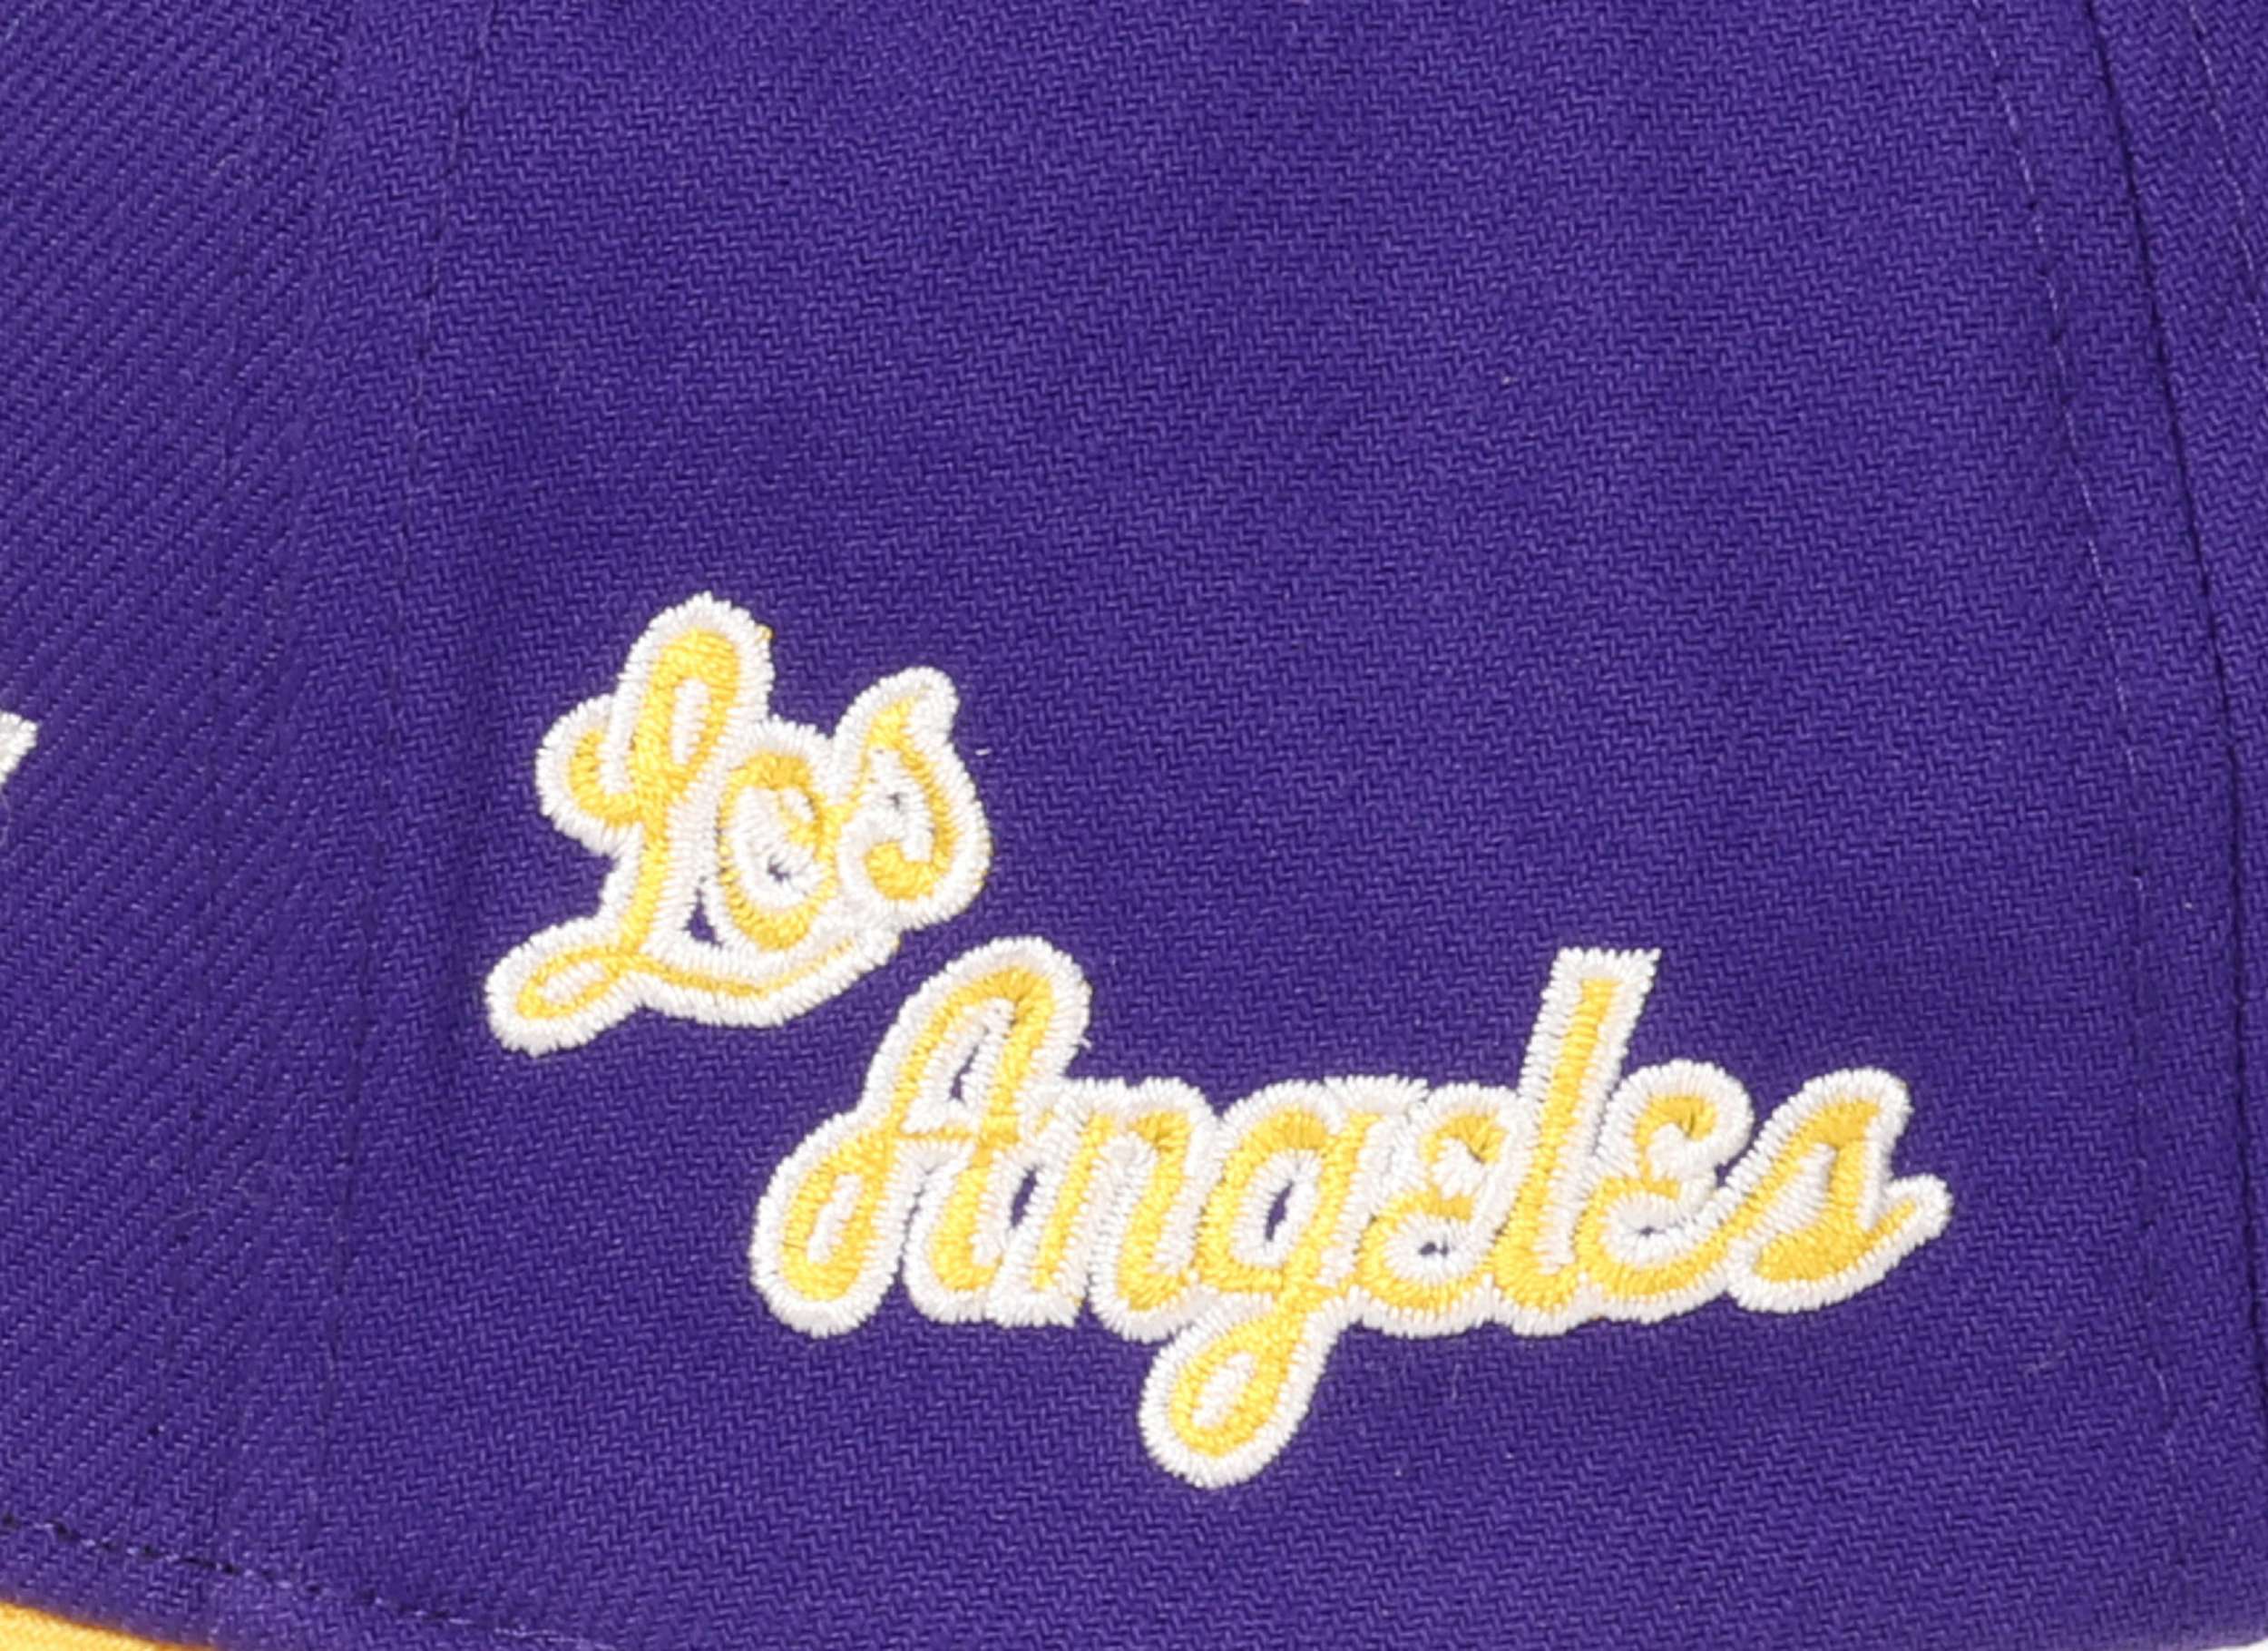 Los Angeles Lakers NBA Team Script 2.0 Lila Gelb Verstellbare Gebogene Snapback Cap Mitchell & Ness